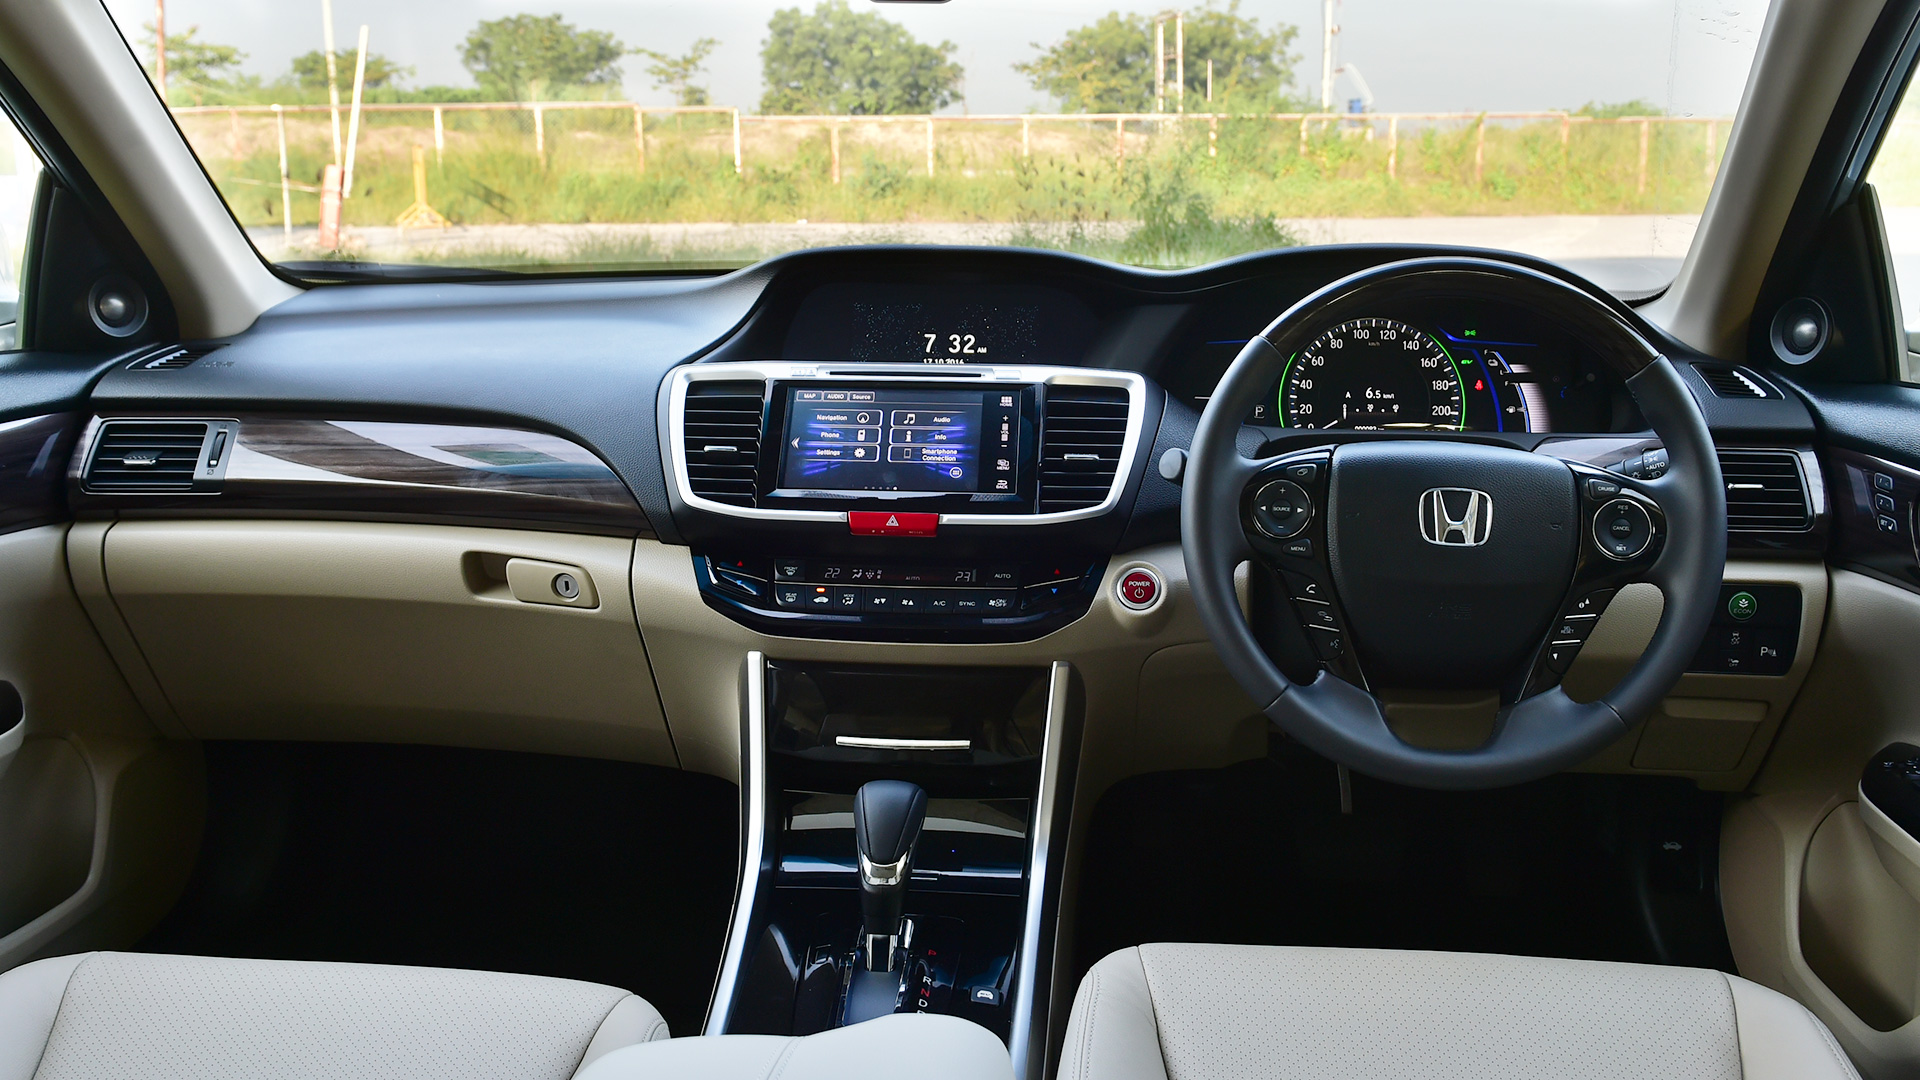 Honda Accord Hybrid 2016 Std Interior Car Photos Overdrive